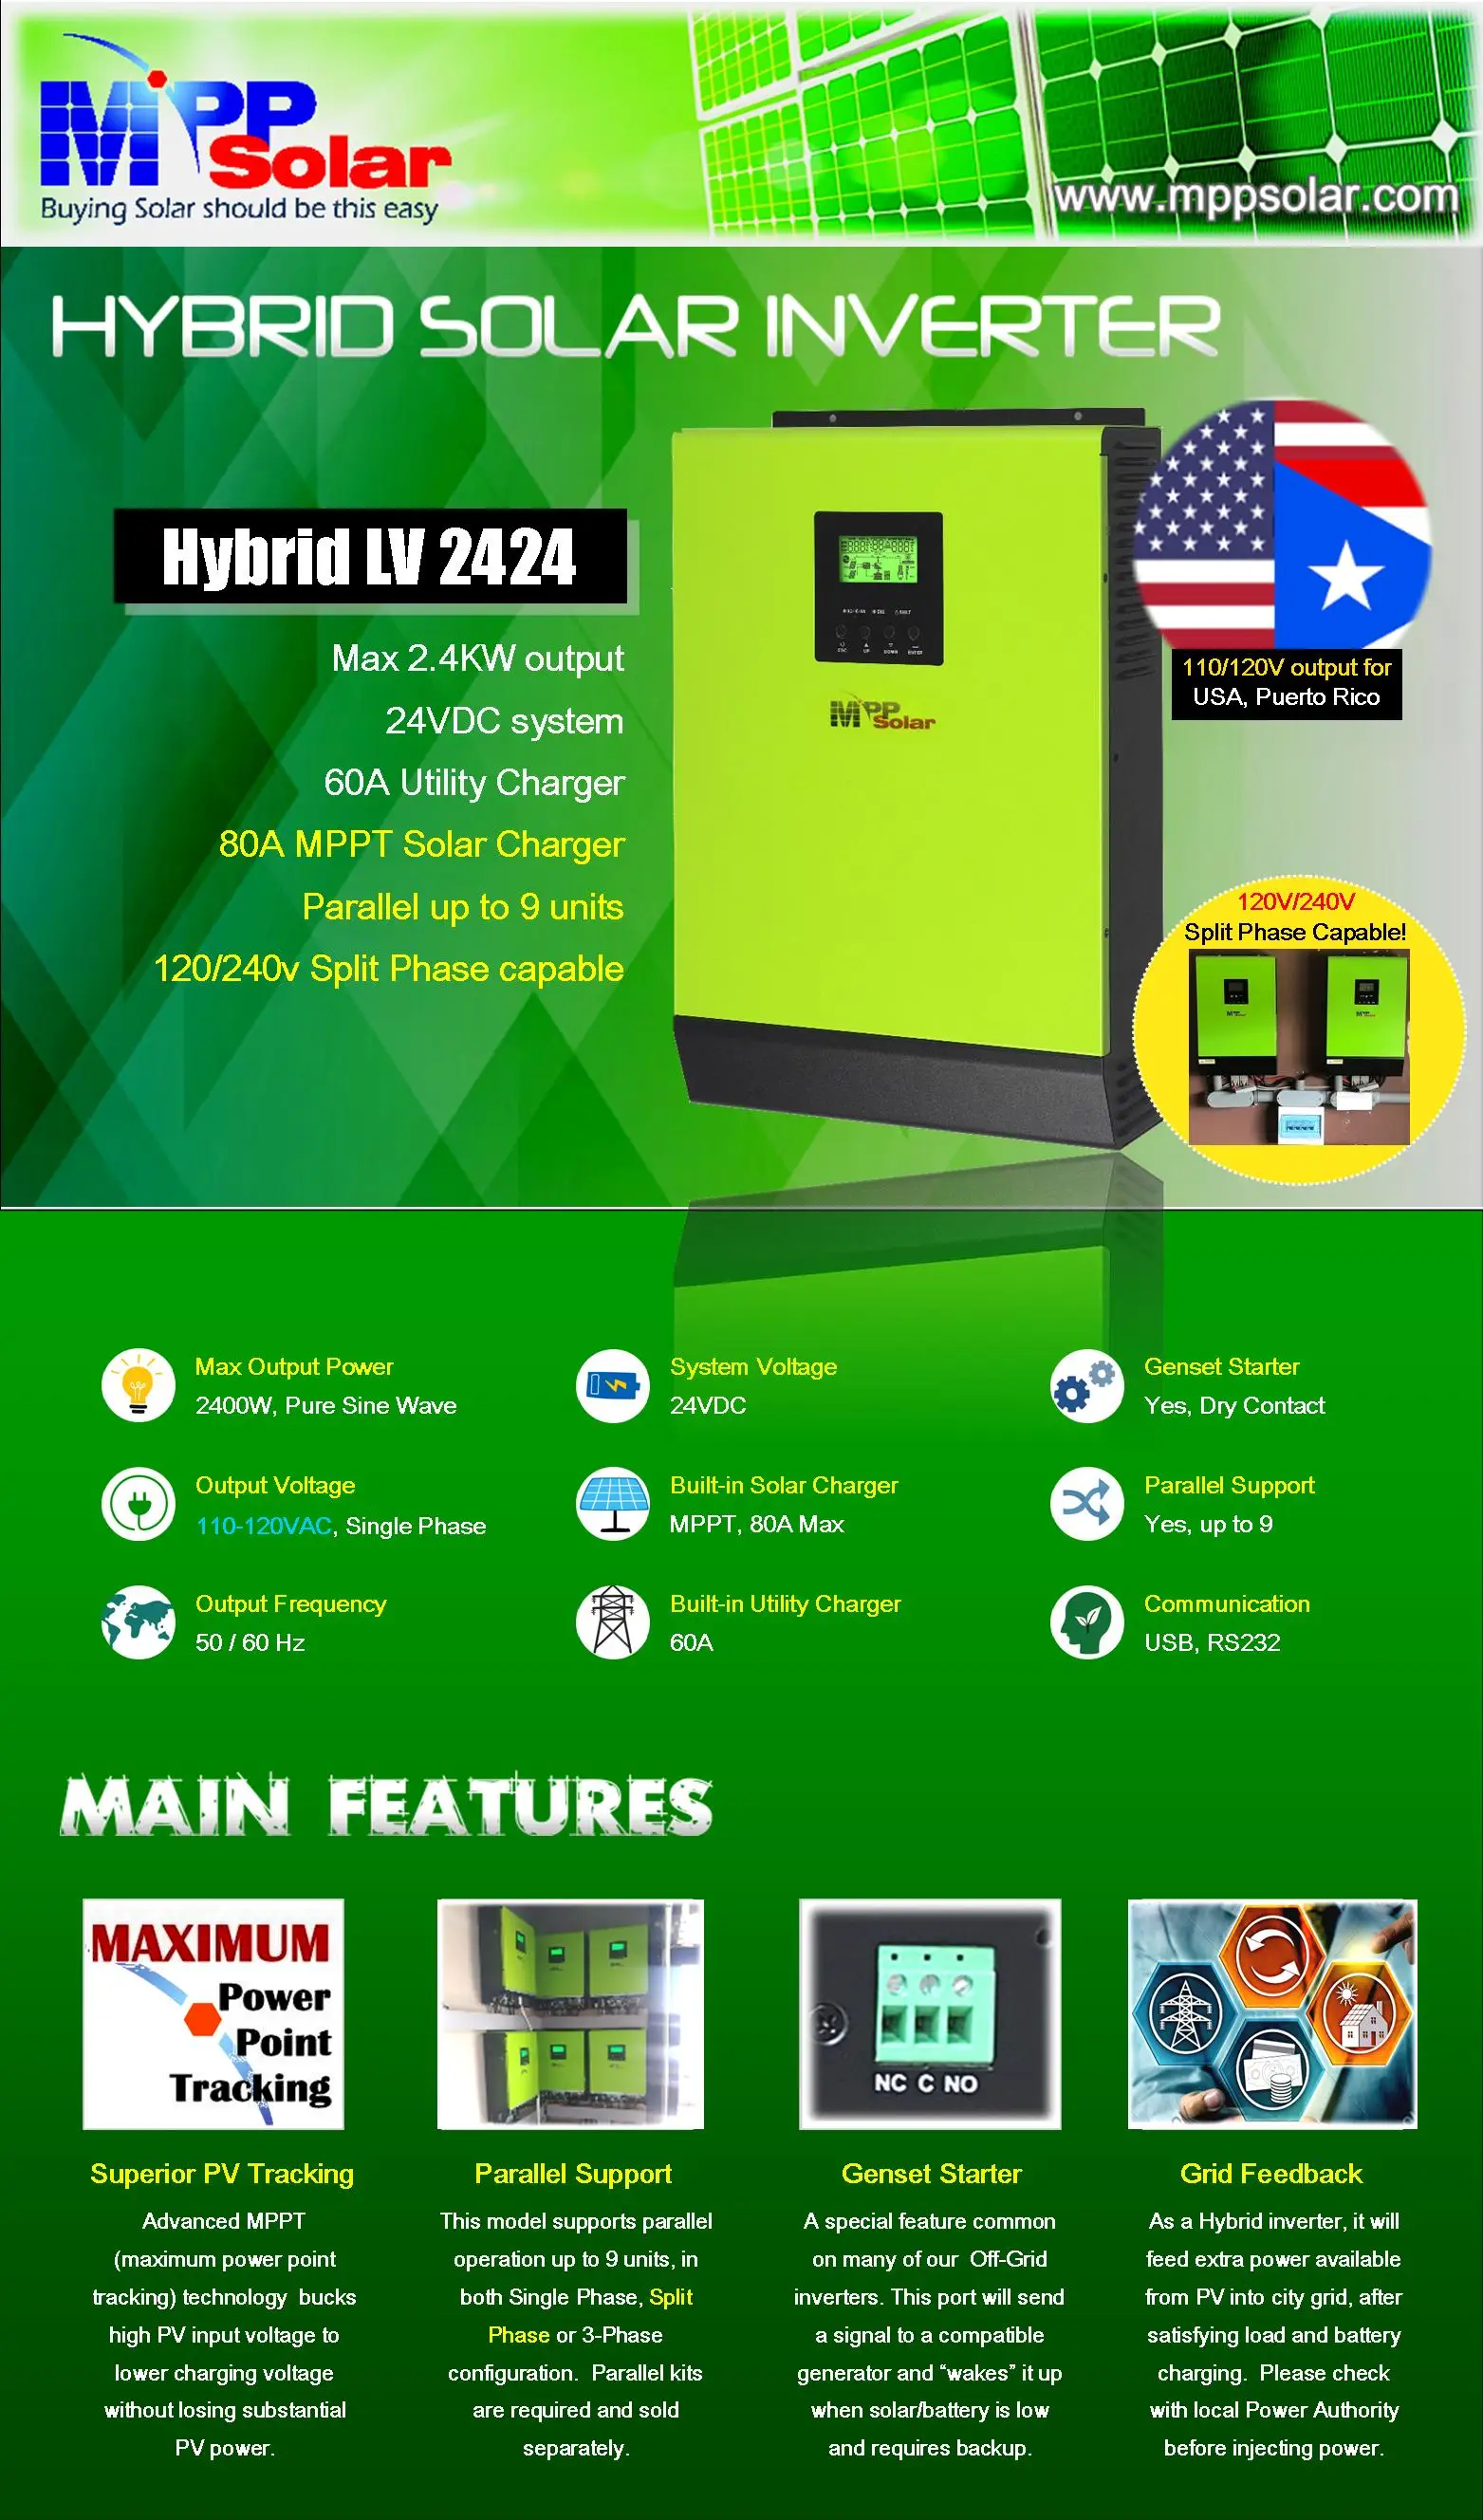 Hybrid LV2424 2.4kw 24v mpp solar hybrid inverter 110vac 80A mppt charger